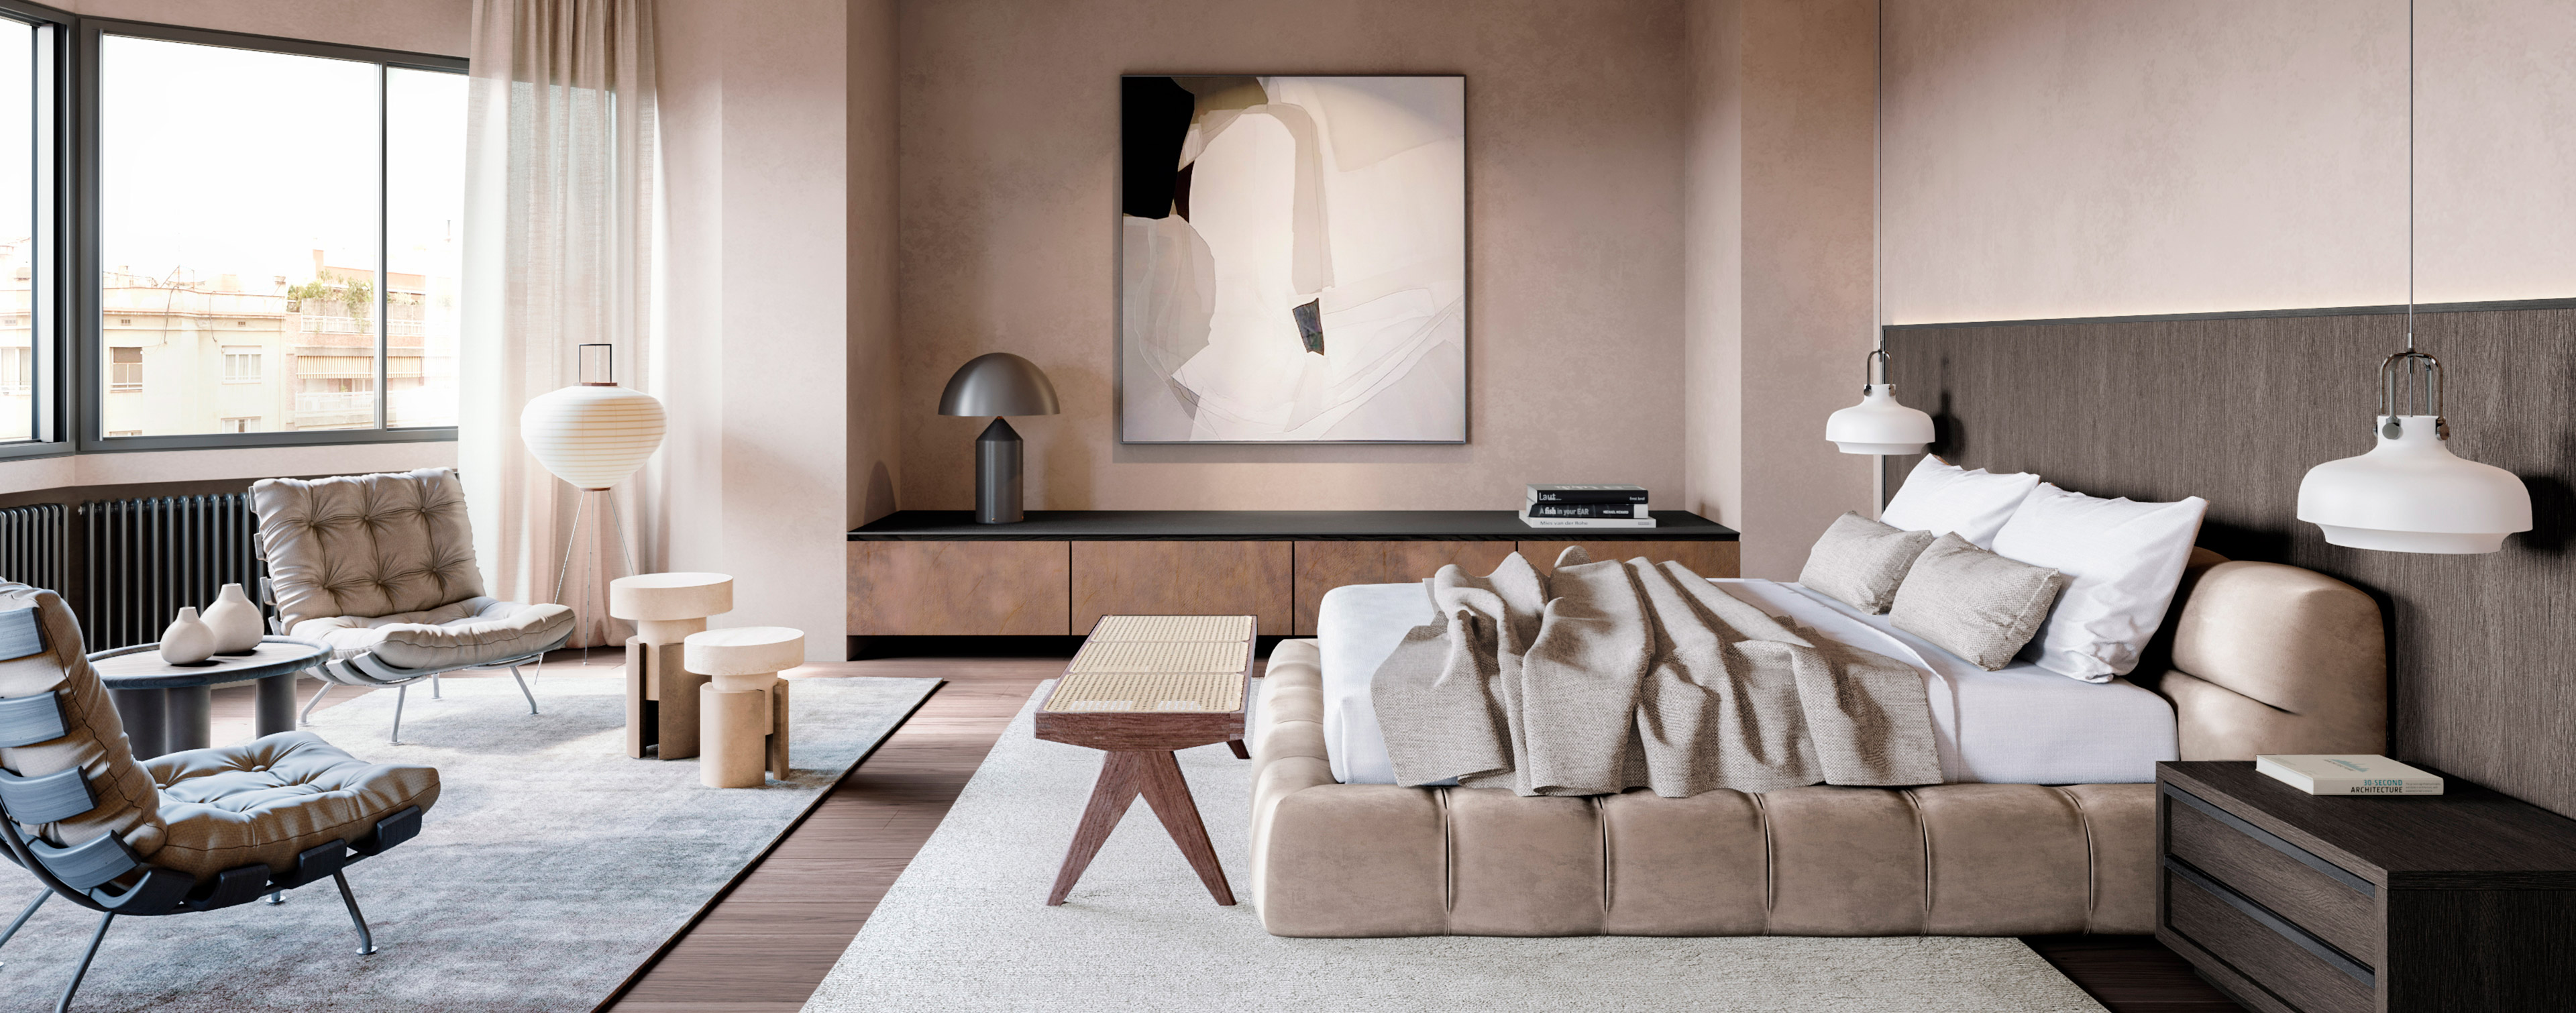 luv studio luxury architects barcelona turo park apartment IMG 01 - LUV Studio - Arquitectura y diseño - Barcelona